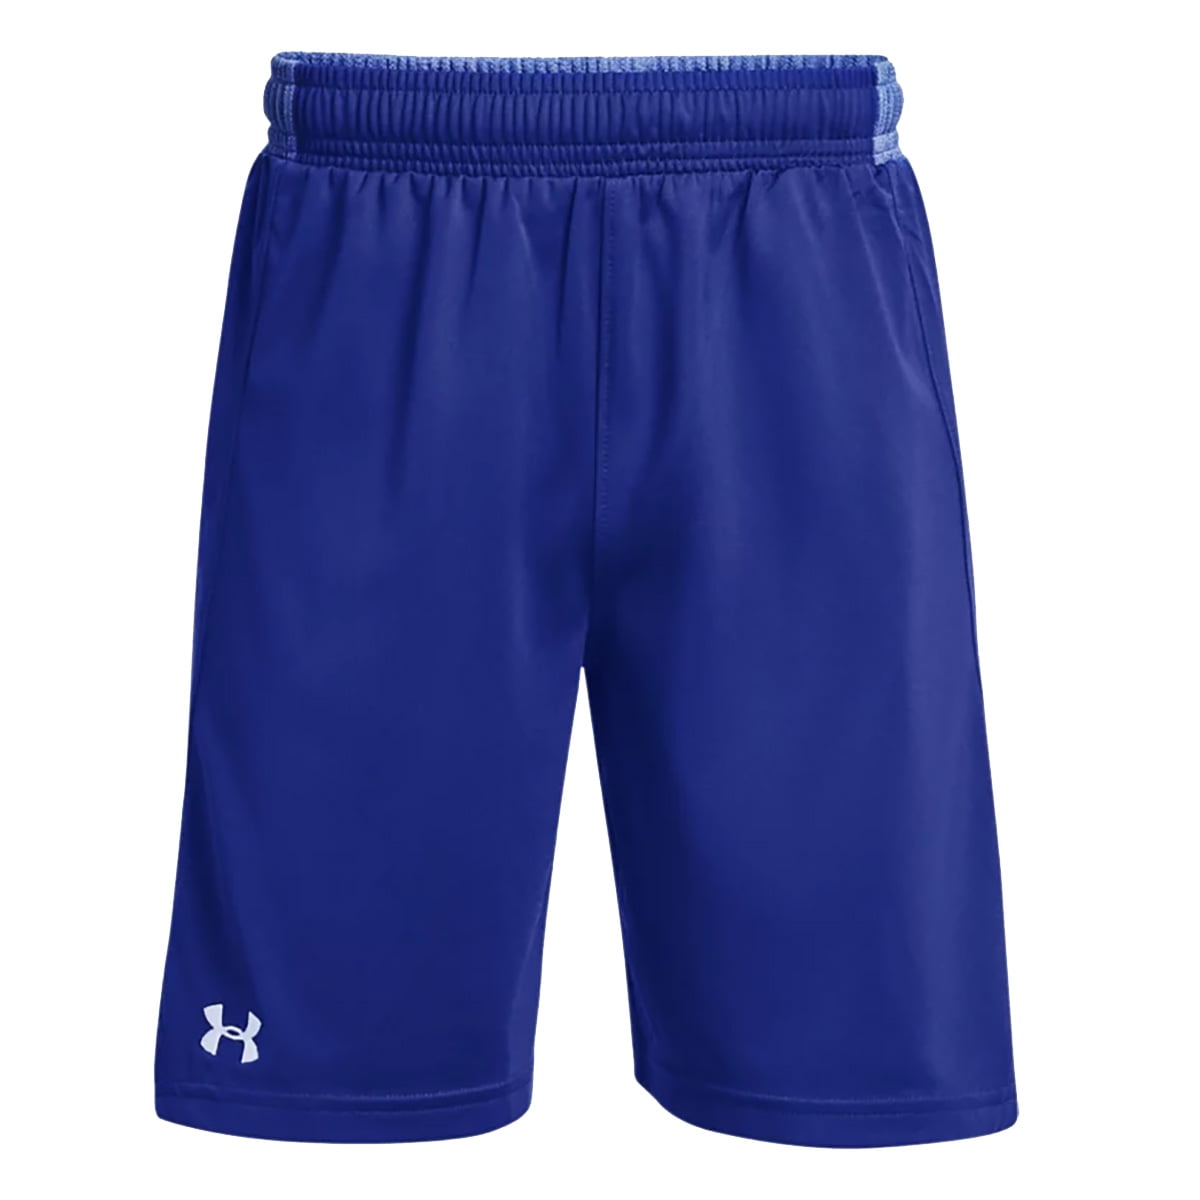 Under Armour Boy's Locker Shorts - Walmart.com